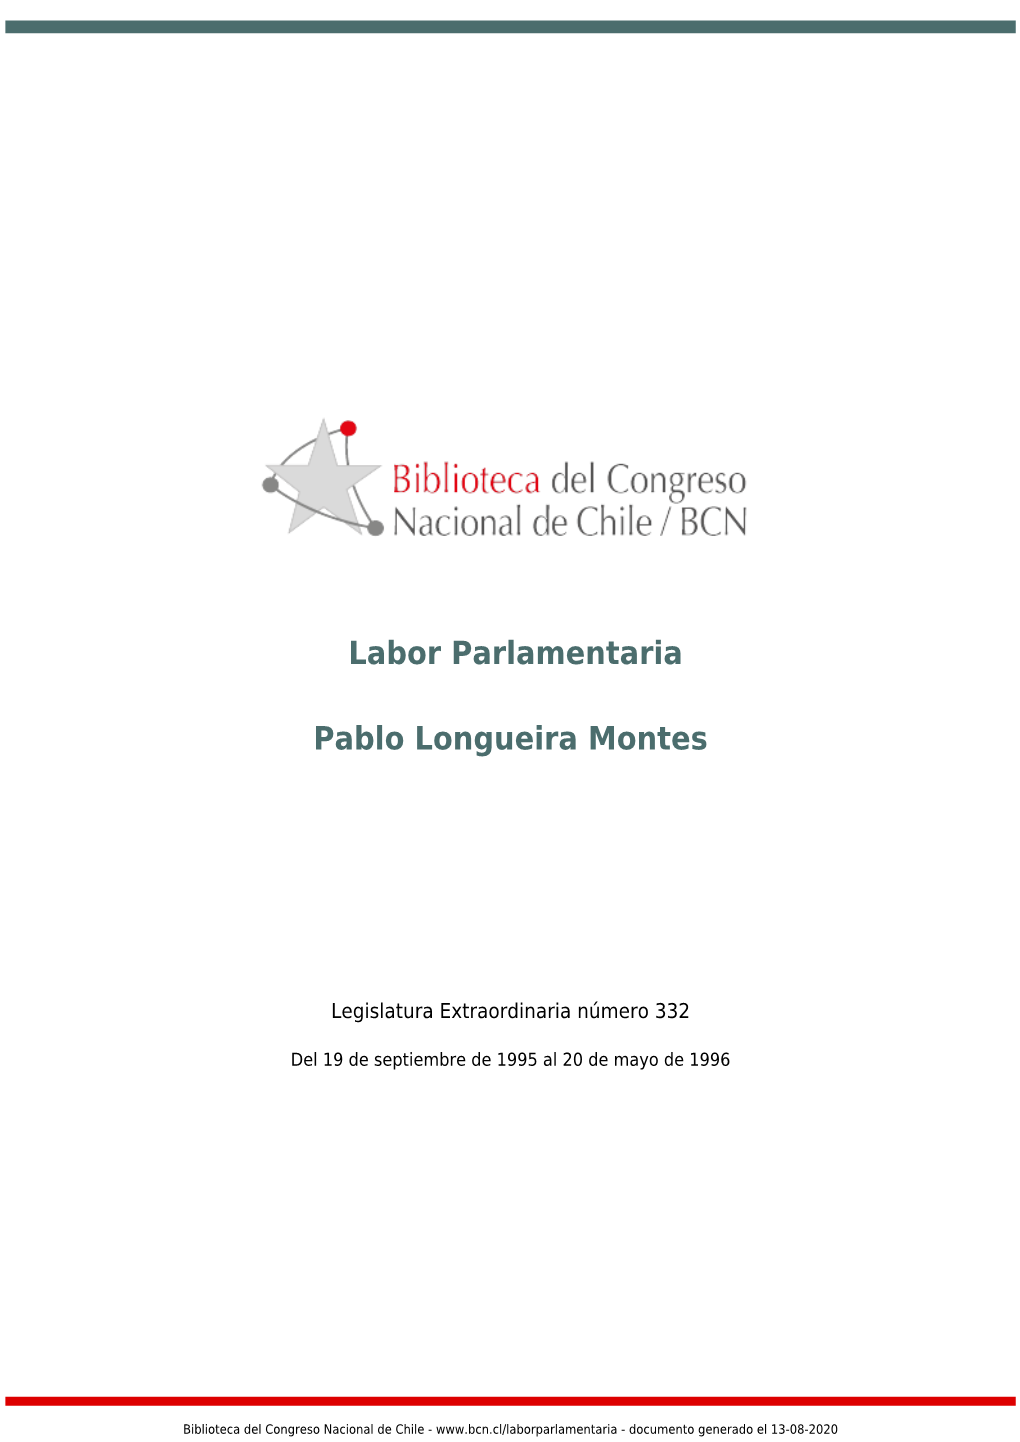 Labor Parlamentaria Pablo Longueira Montes